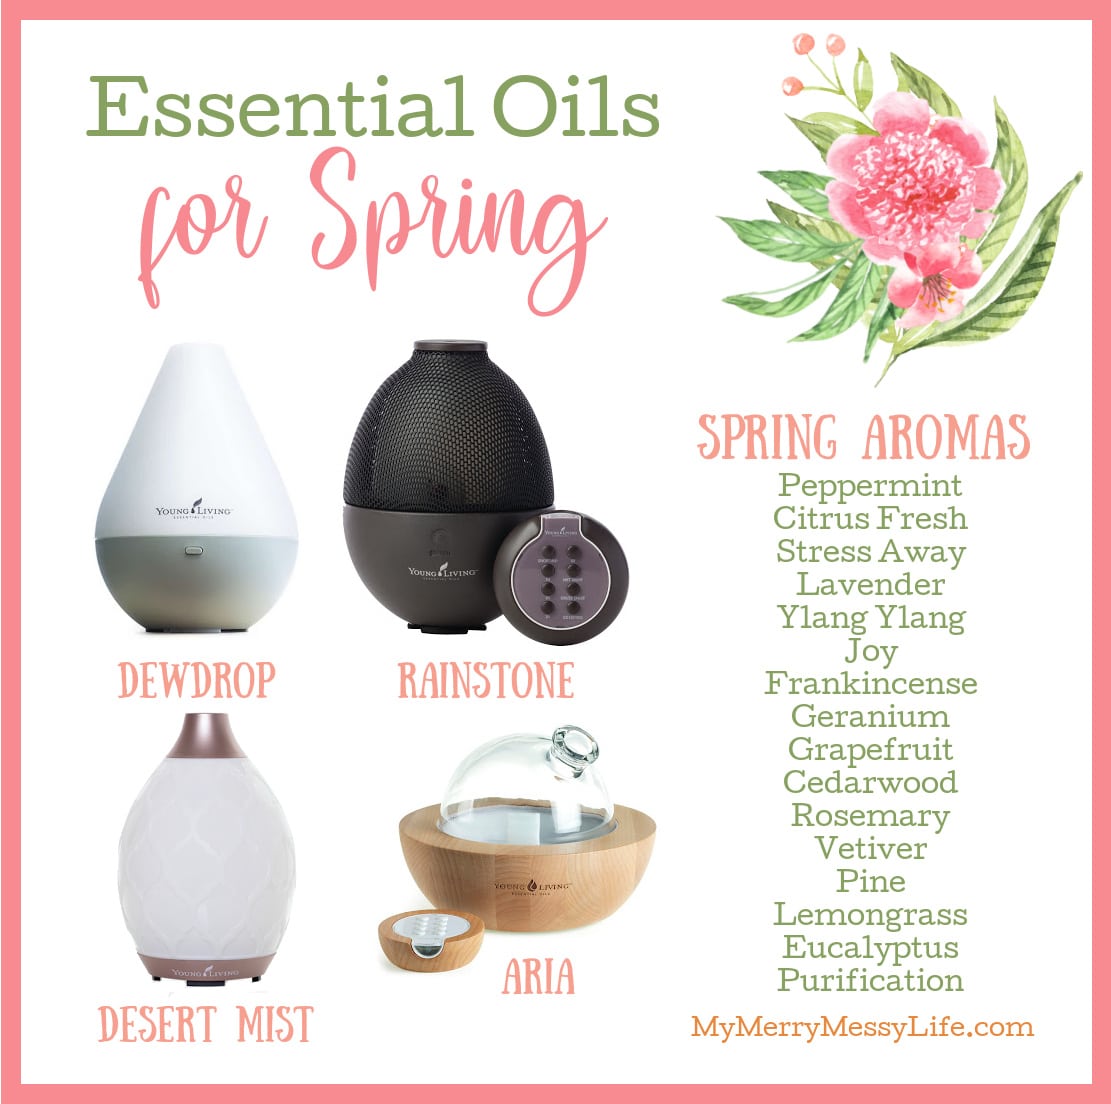 Essential oils for spring aromas - Peppermint, Citrus Fresh, Stress Away, Lavender, Ylang Ylang, Joy, Frankincense, Geranium and more!